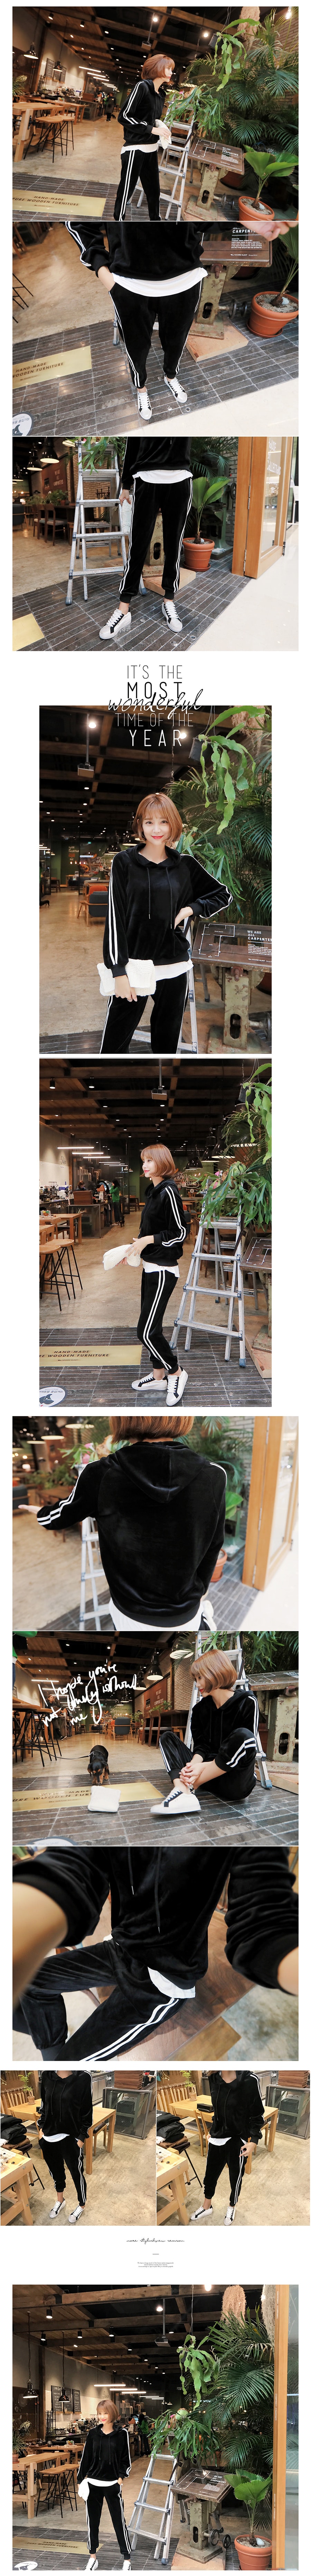 [Limited Quantity Sale] Side Stripe Velvet Hoodie and Jogger Pants 2 Pieces Set #Black One Size(S-M)